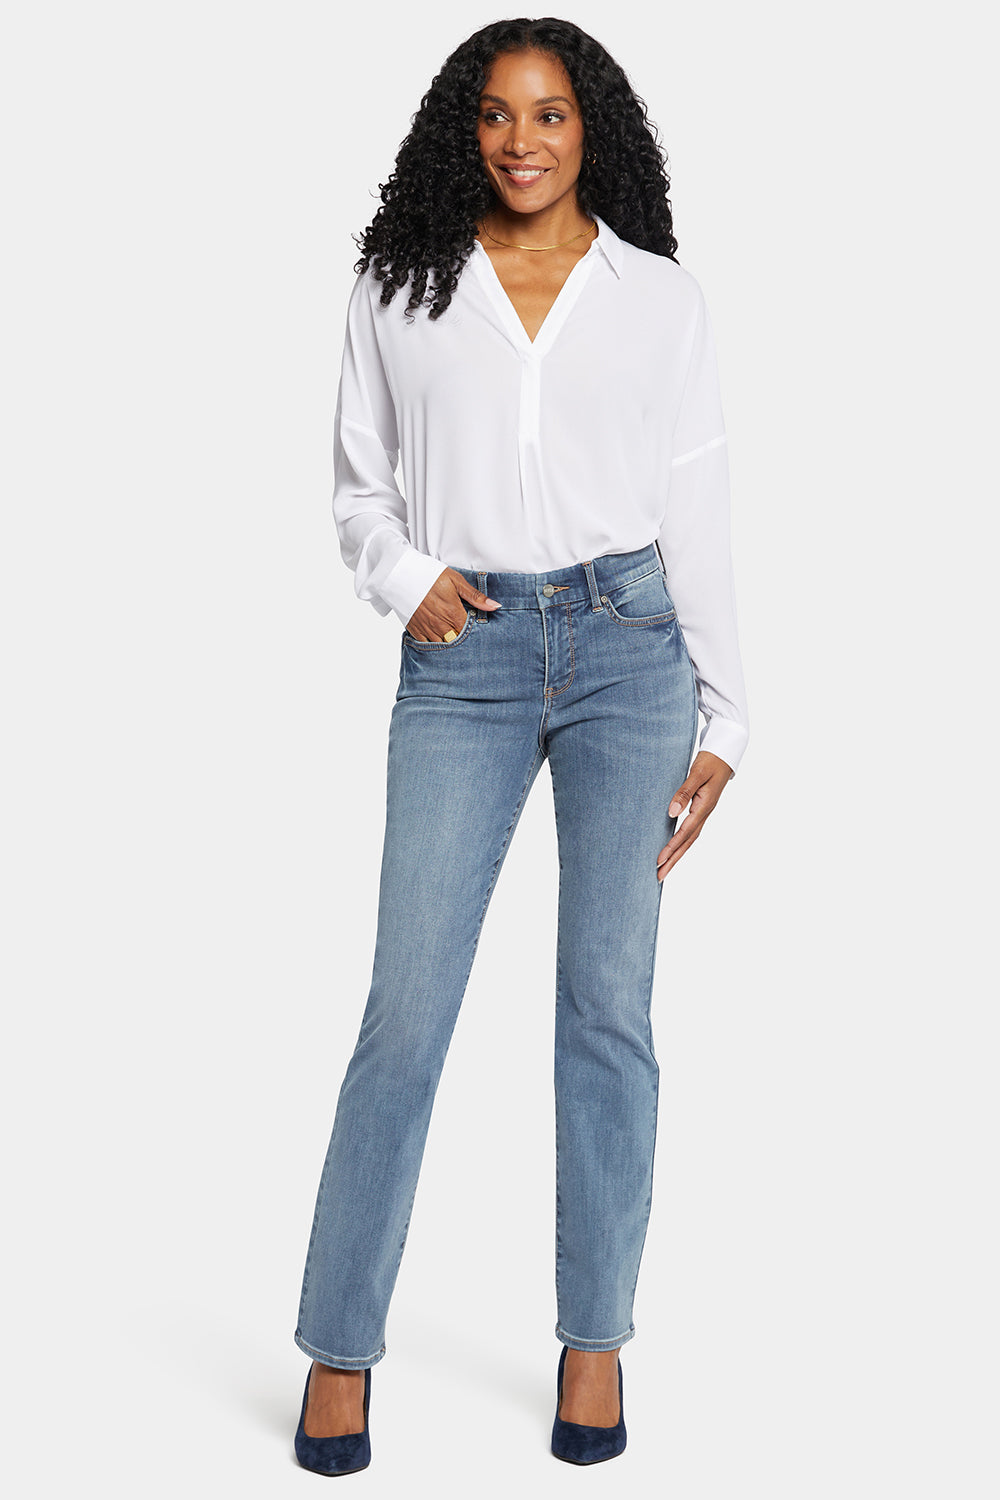 Waist-Match™ Marilyn Straight Jeans - Paddington Blue | NYDJ